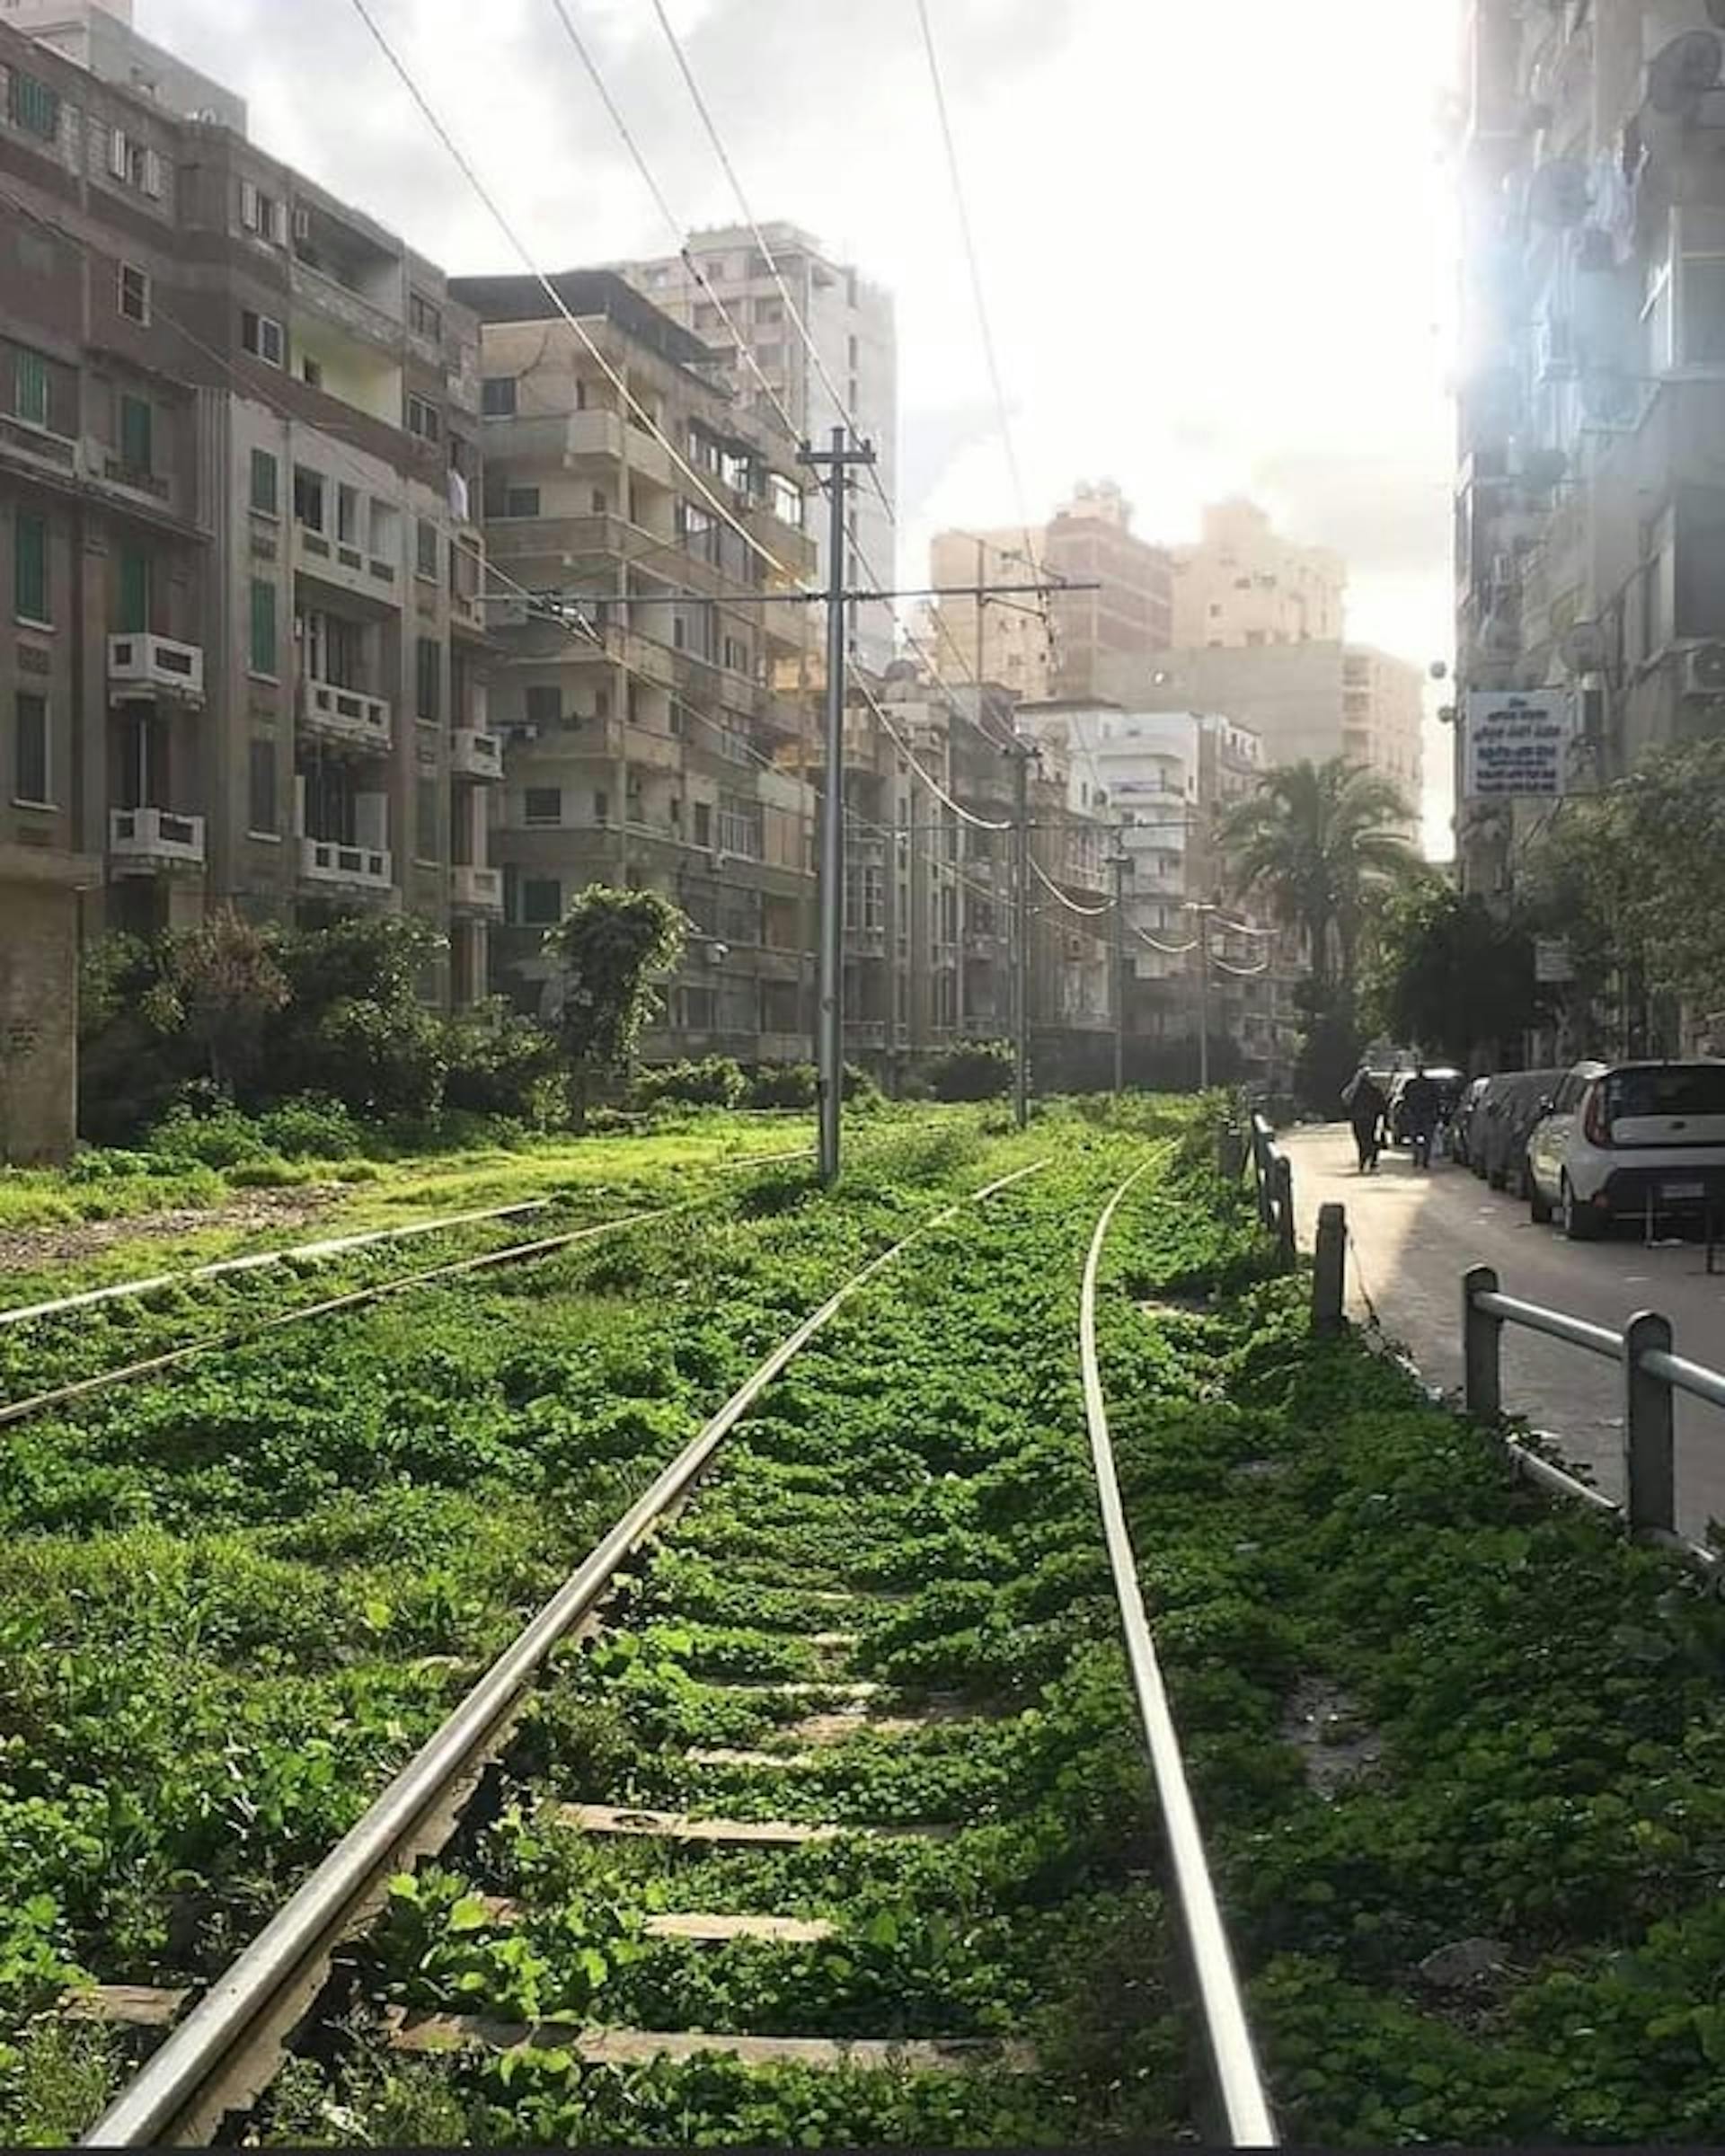 İskenderiye'de bir tramvay yolu, u/Different-Giraffe255 tarafından r/Egypt'te yayınlandı. (https://www.reddit.com/r/Egypt/comments/1152219/a_tram_track_in_alexandria/)